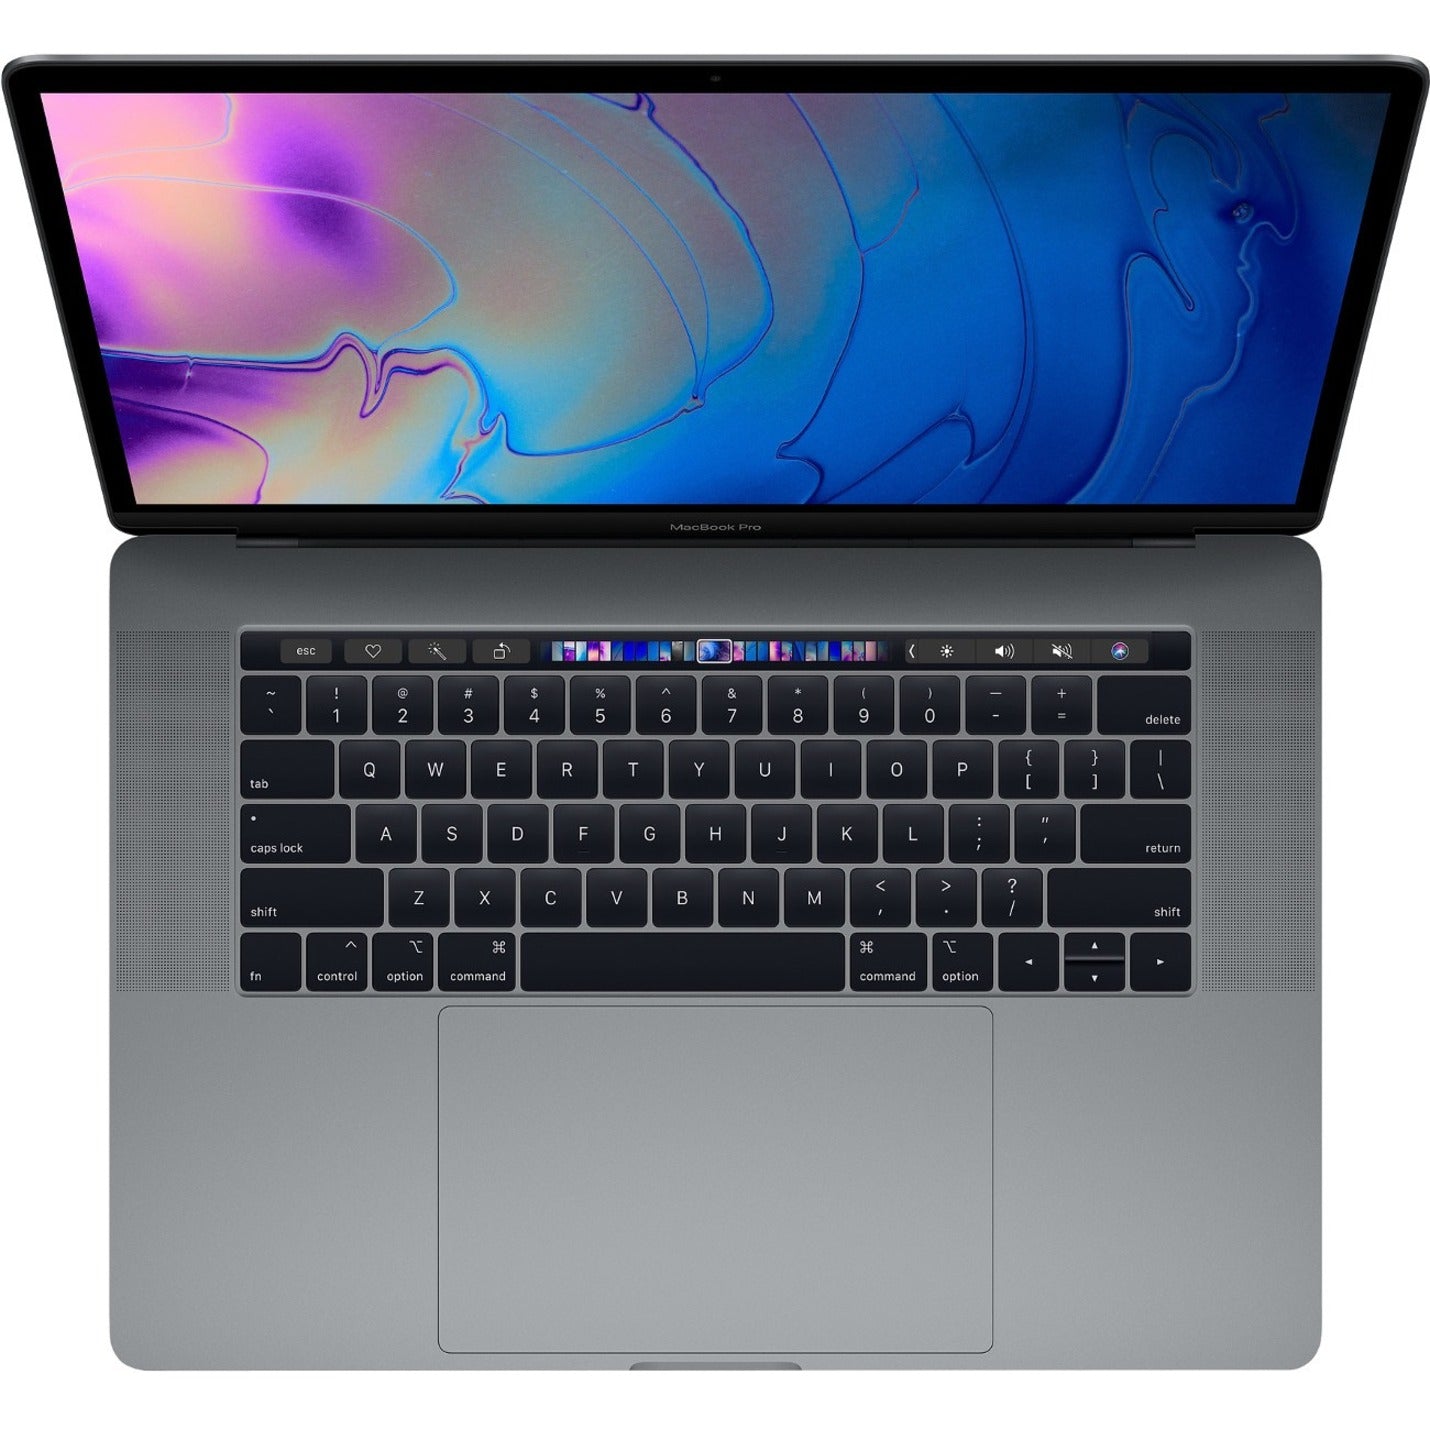 Apple MR942LL/A 15-inch MacBook Pro - Space Gray, 2.6GHz, 16GB RAM, 512GB SSD, Radeon Pro 560X, 10 Hour Battery